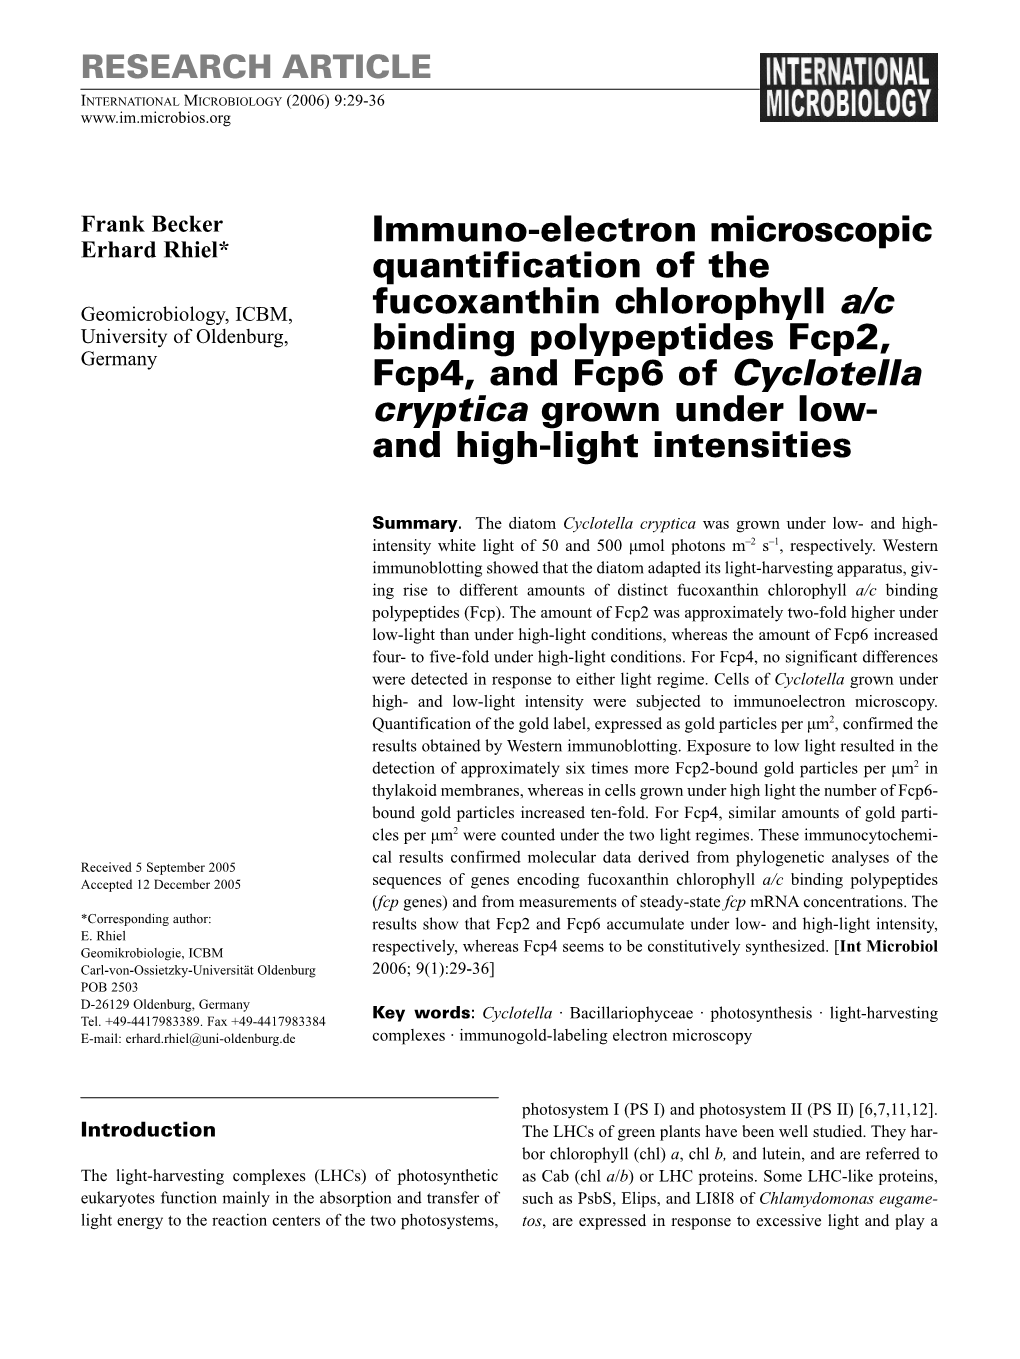 Immuno-Electron Microscopic Quantification of the Fucoxanthin